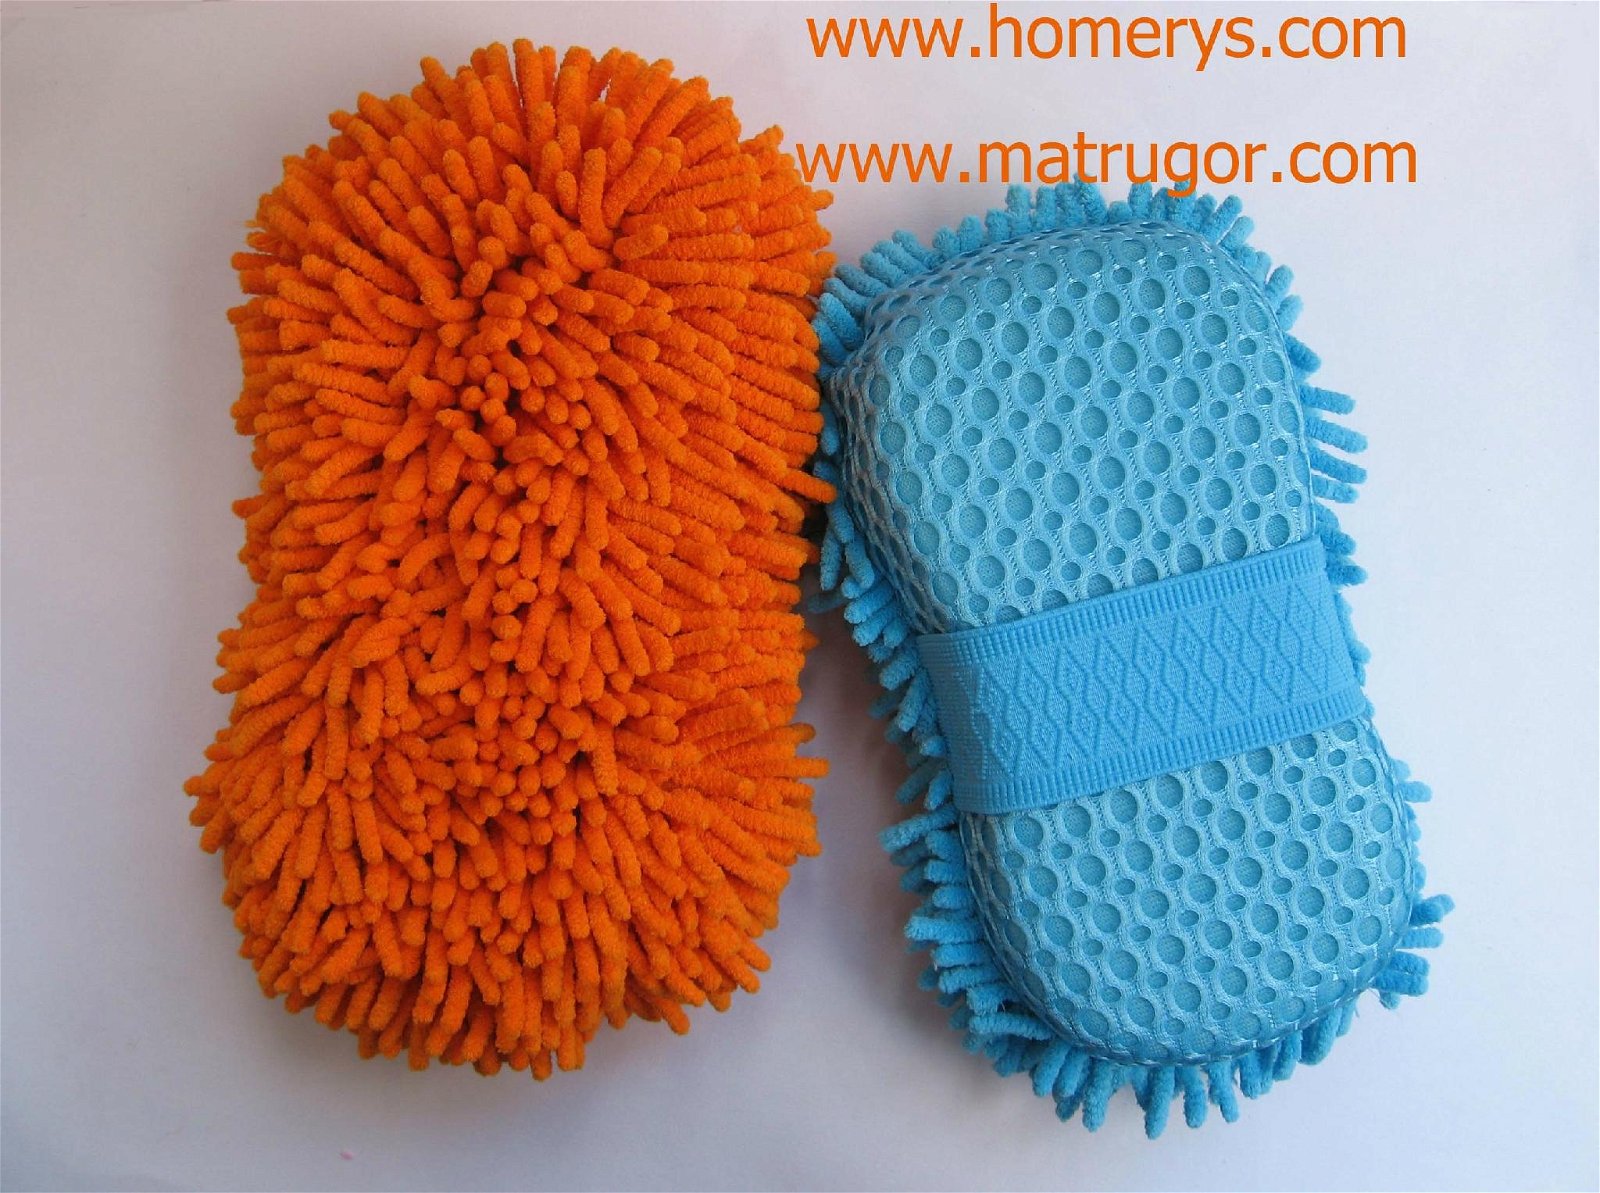 Microfiber Chenille Sponge For Car Care